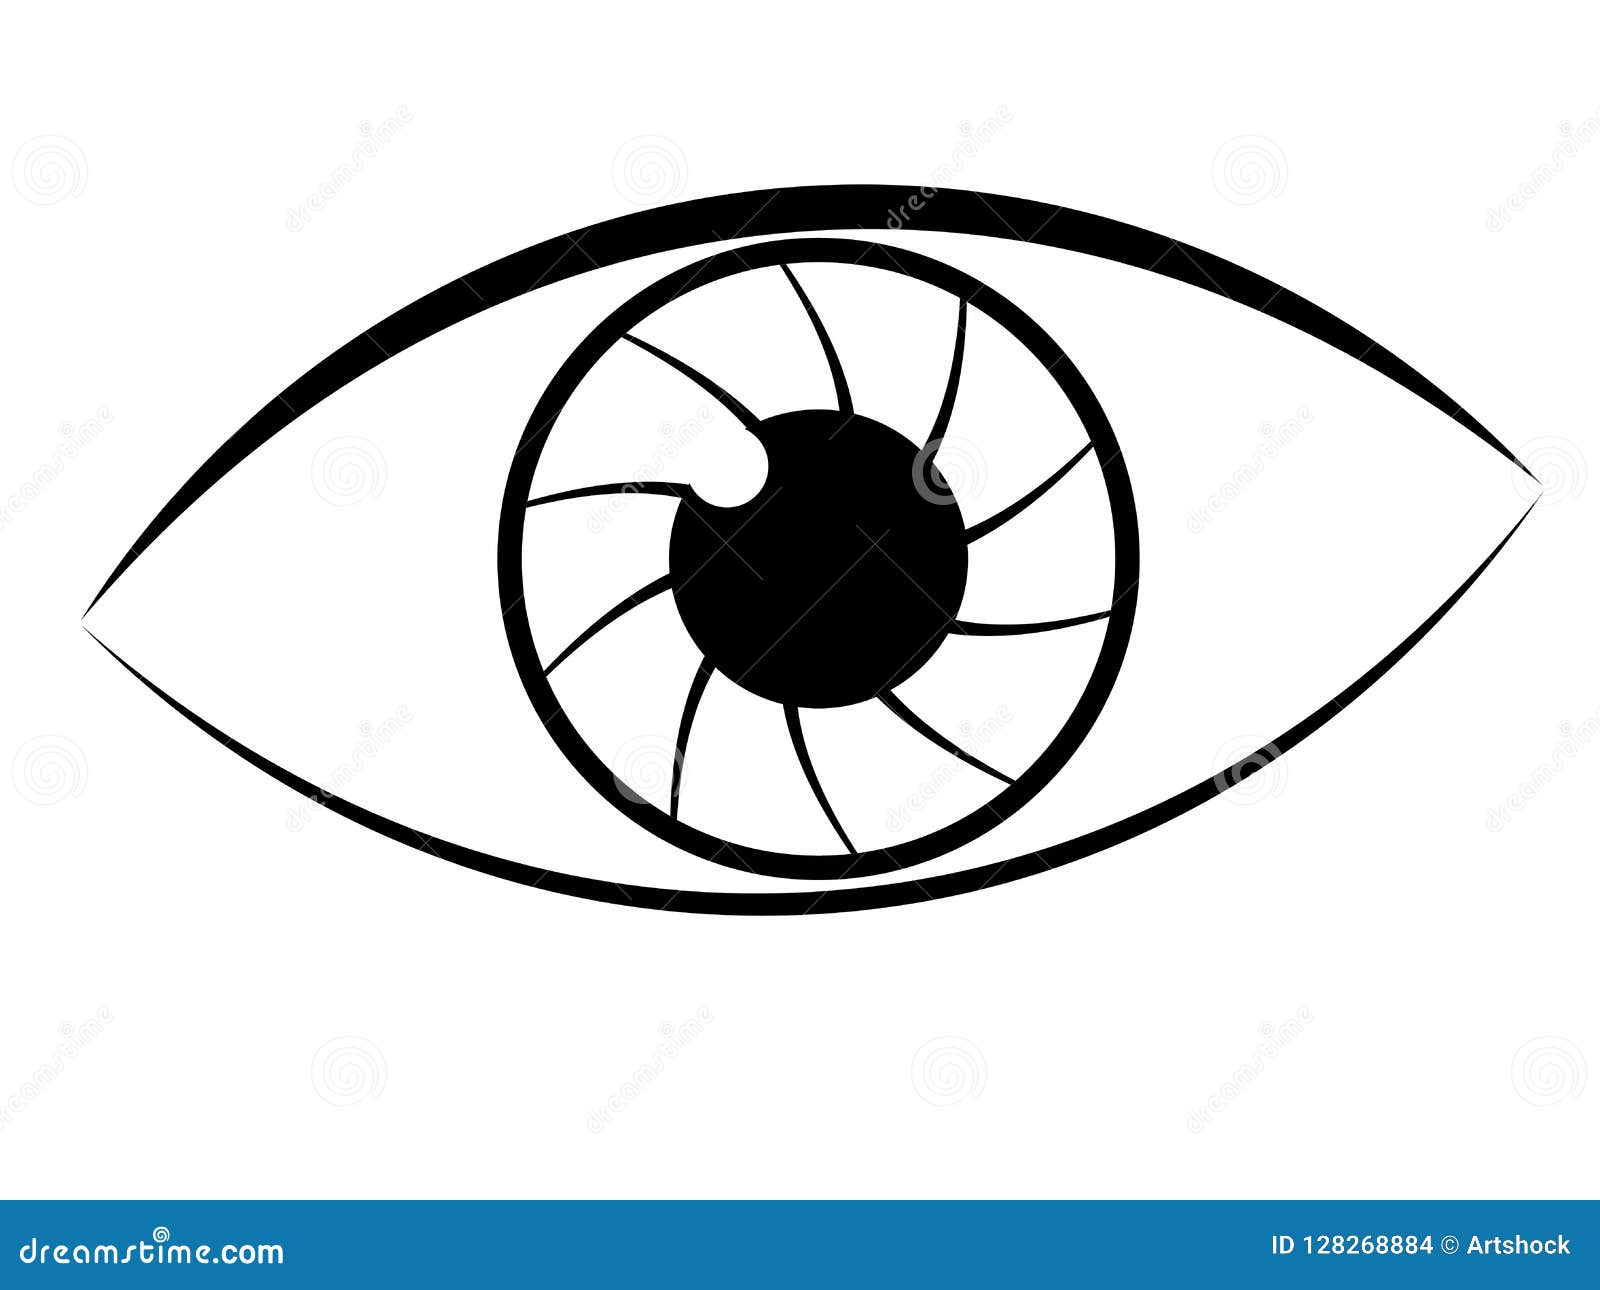 Simple eye lineart stock vector. Illustration of shape